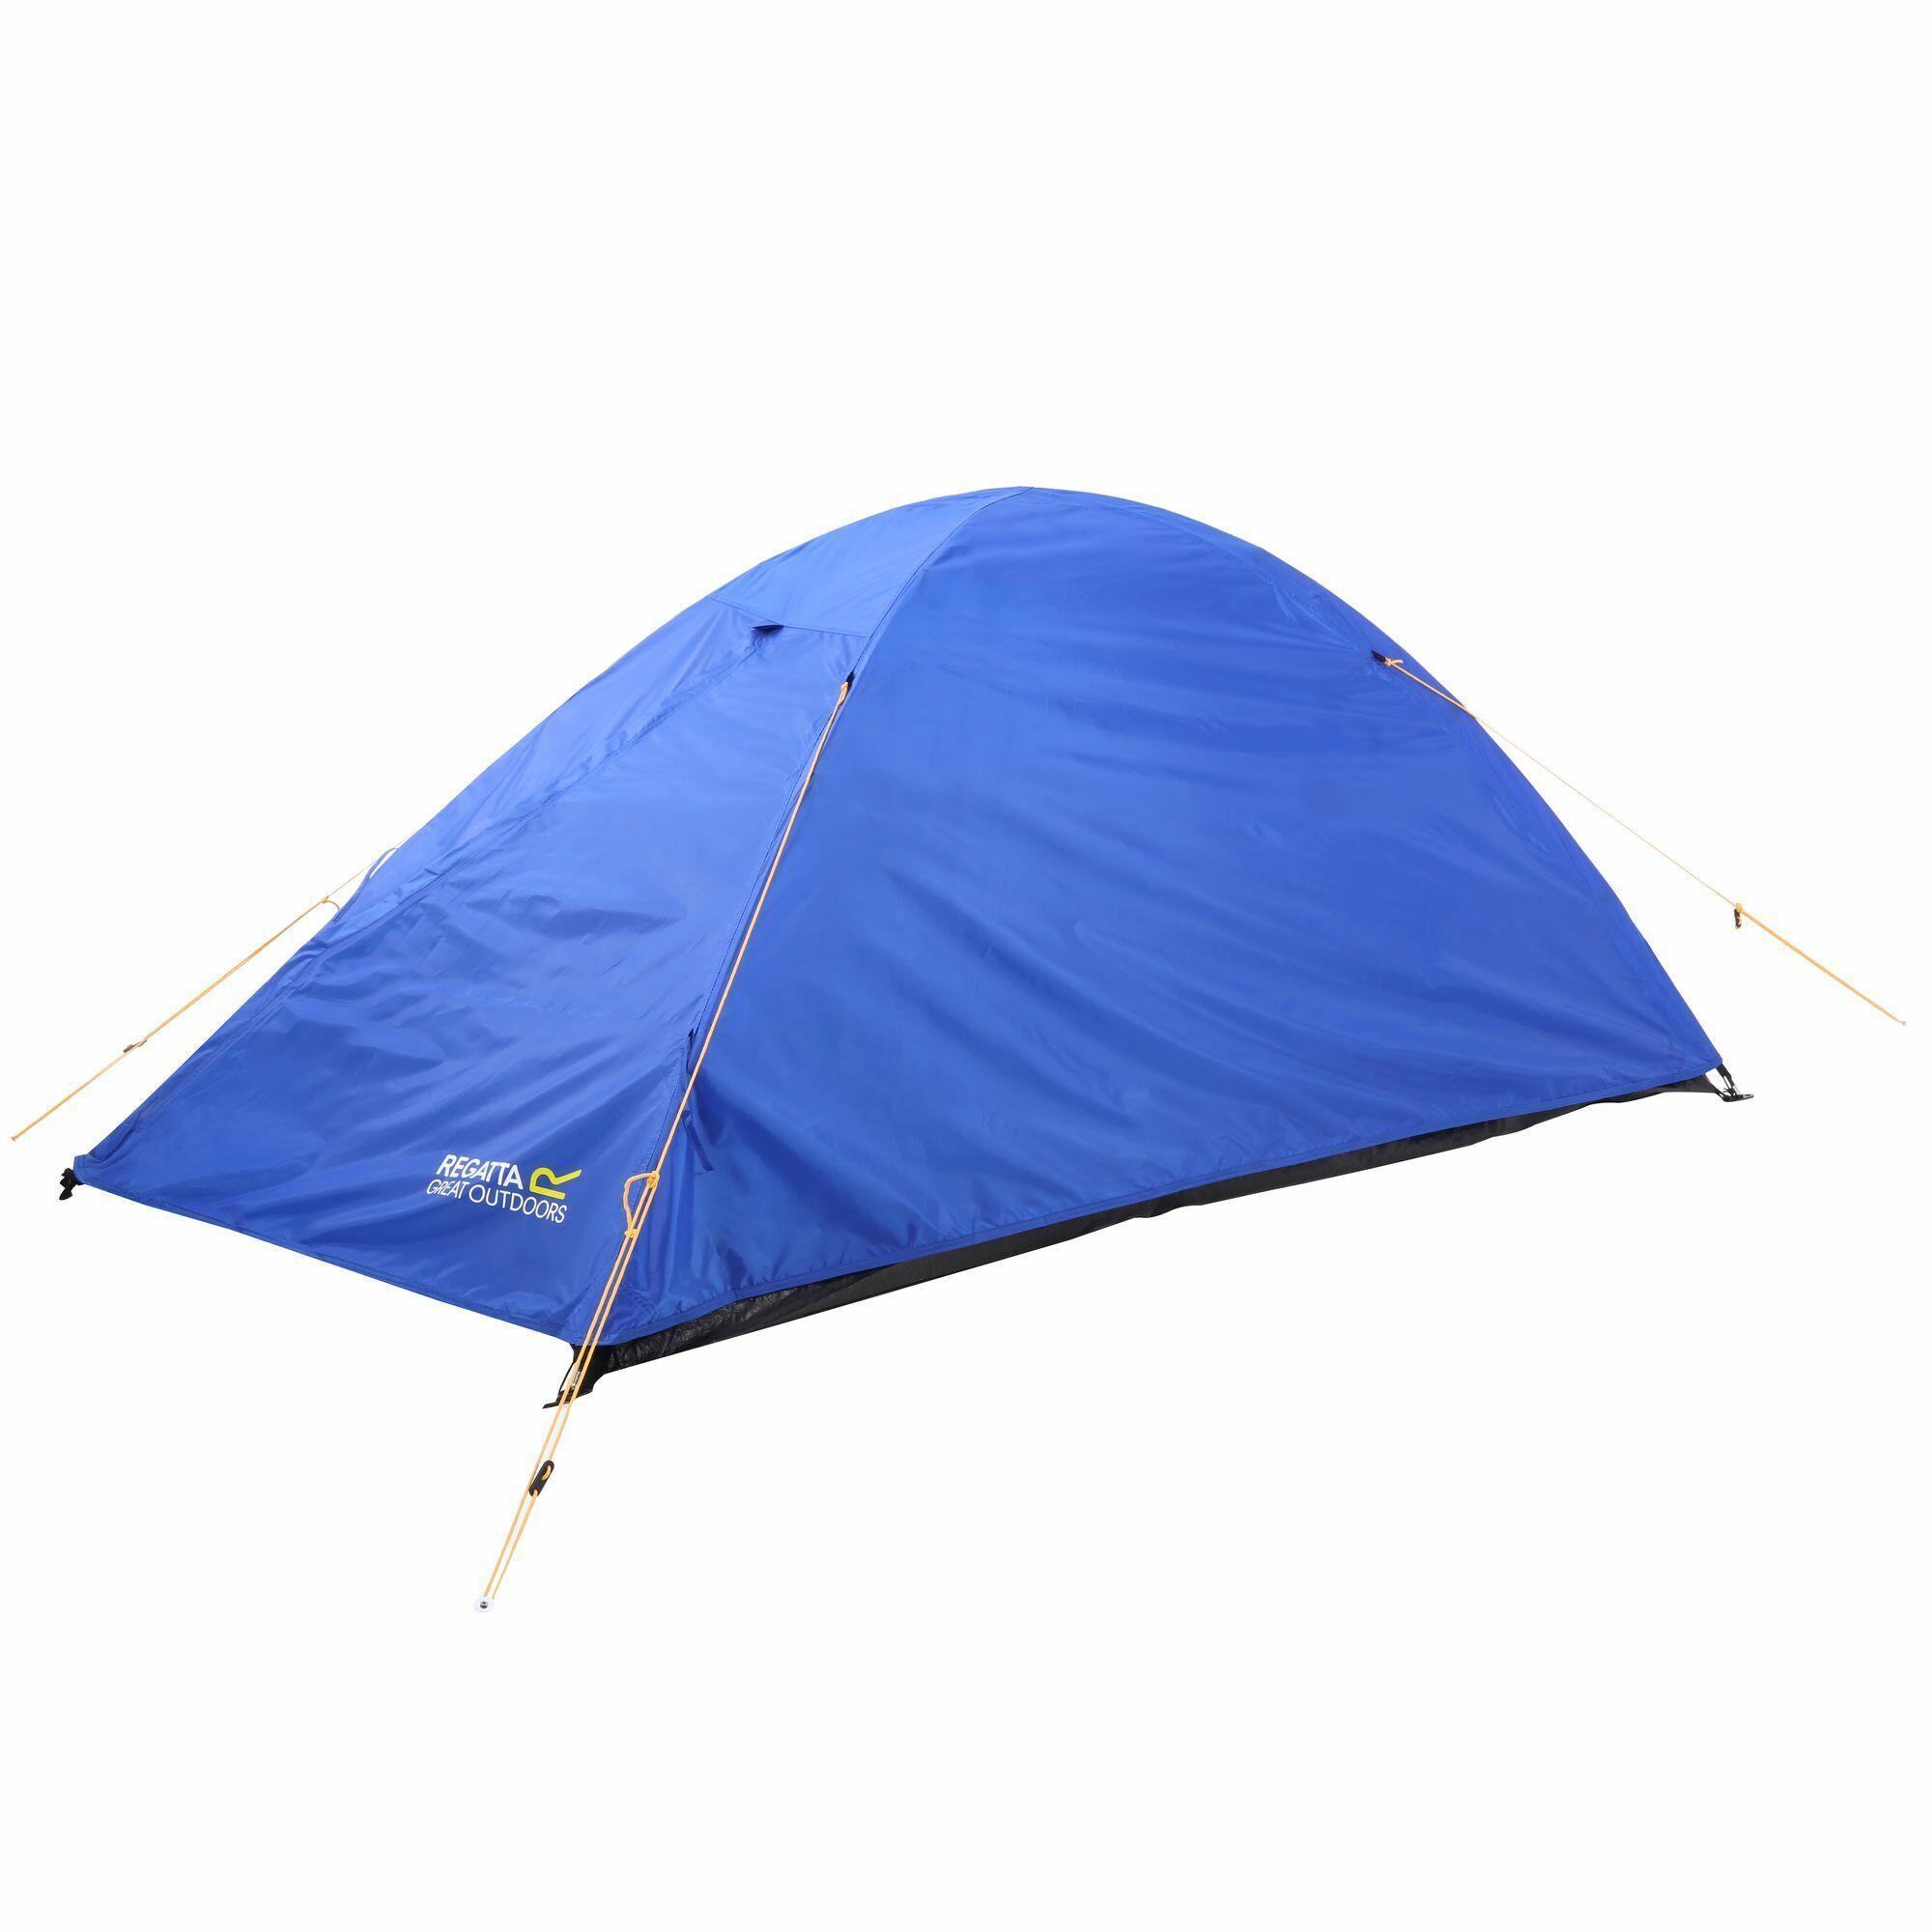 Zeefest 2-Man Adults' Camping Festival Tent - Oxford Blue 1/5